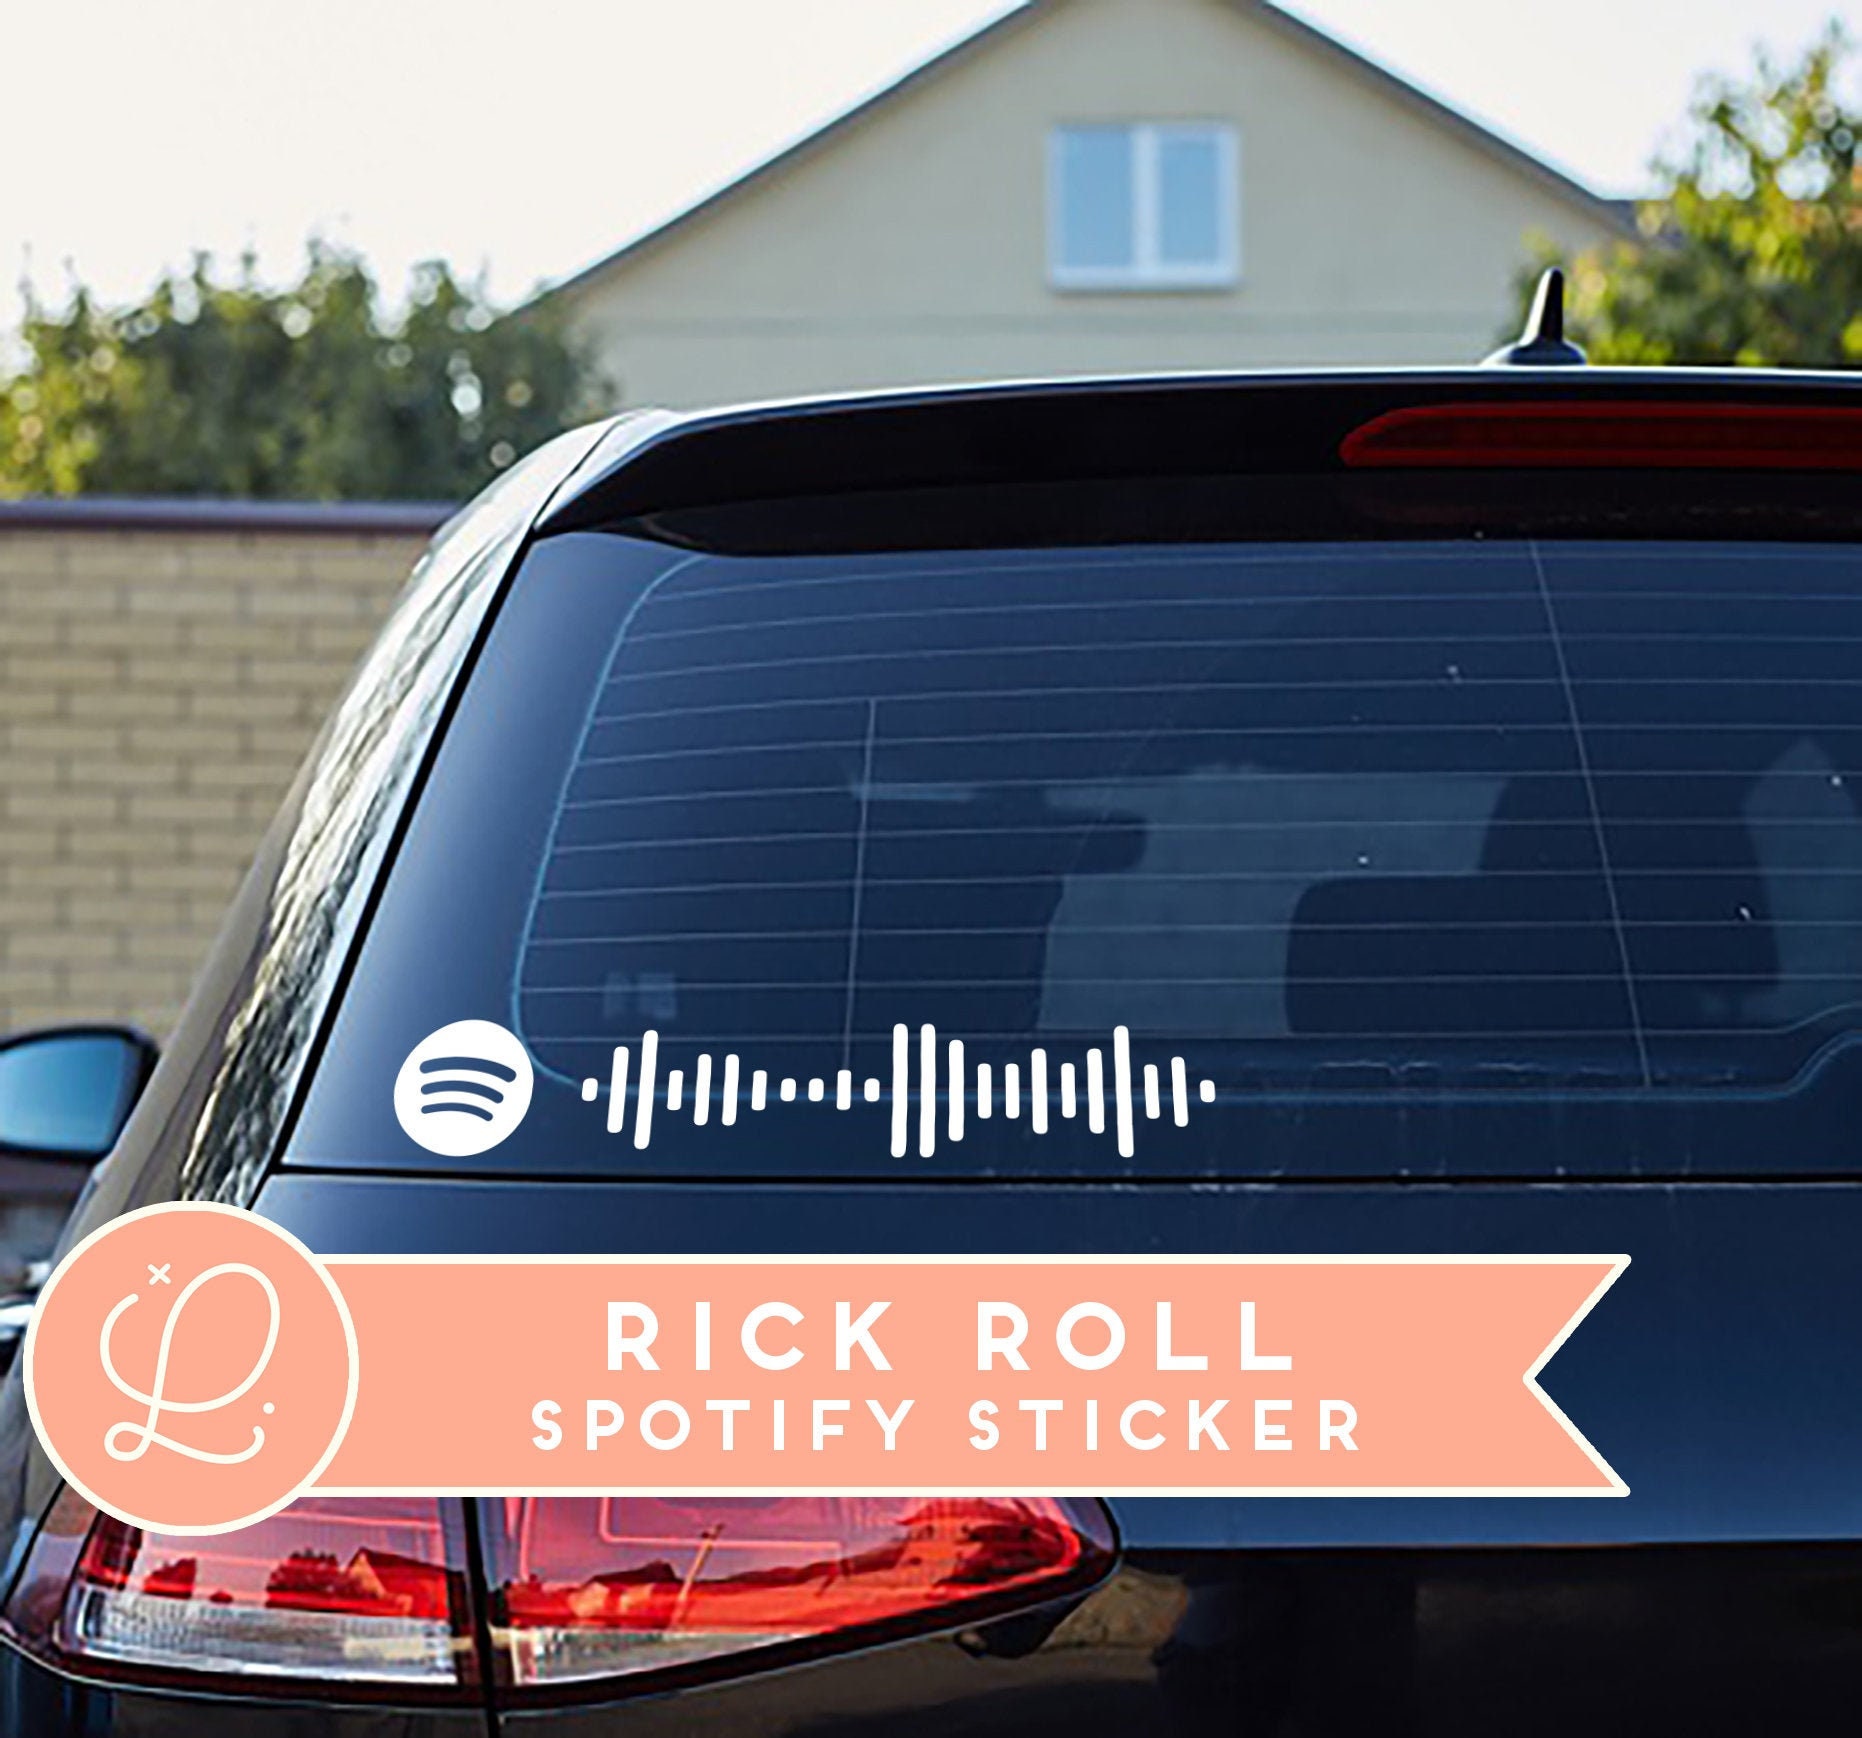 Rick Roll QR Code Bumper Sticker Prank